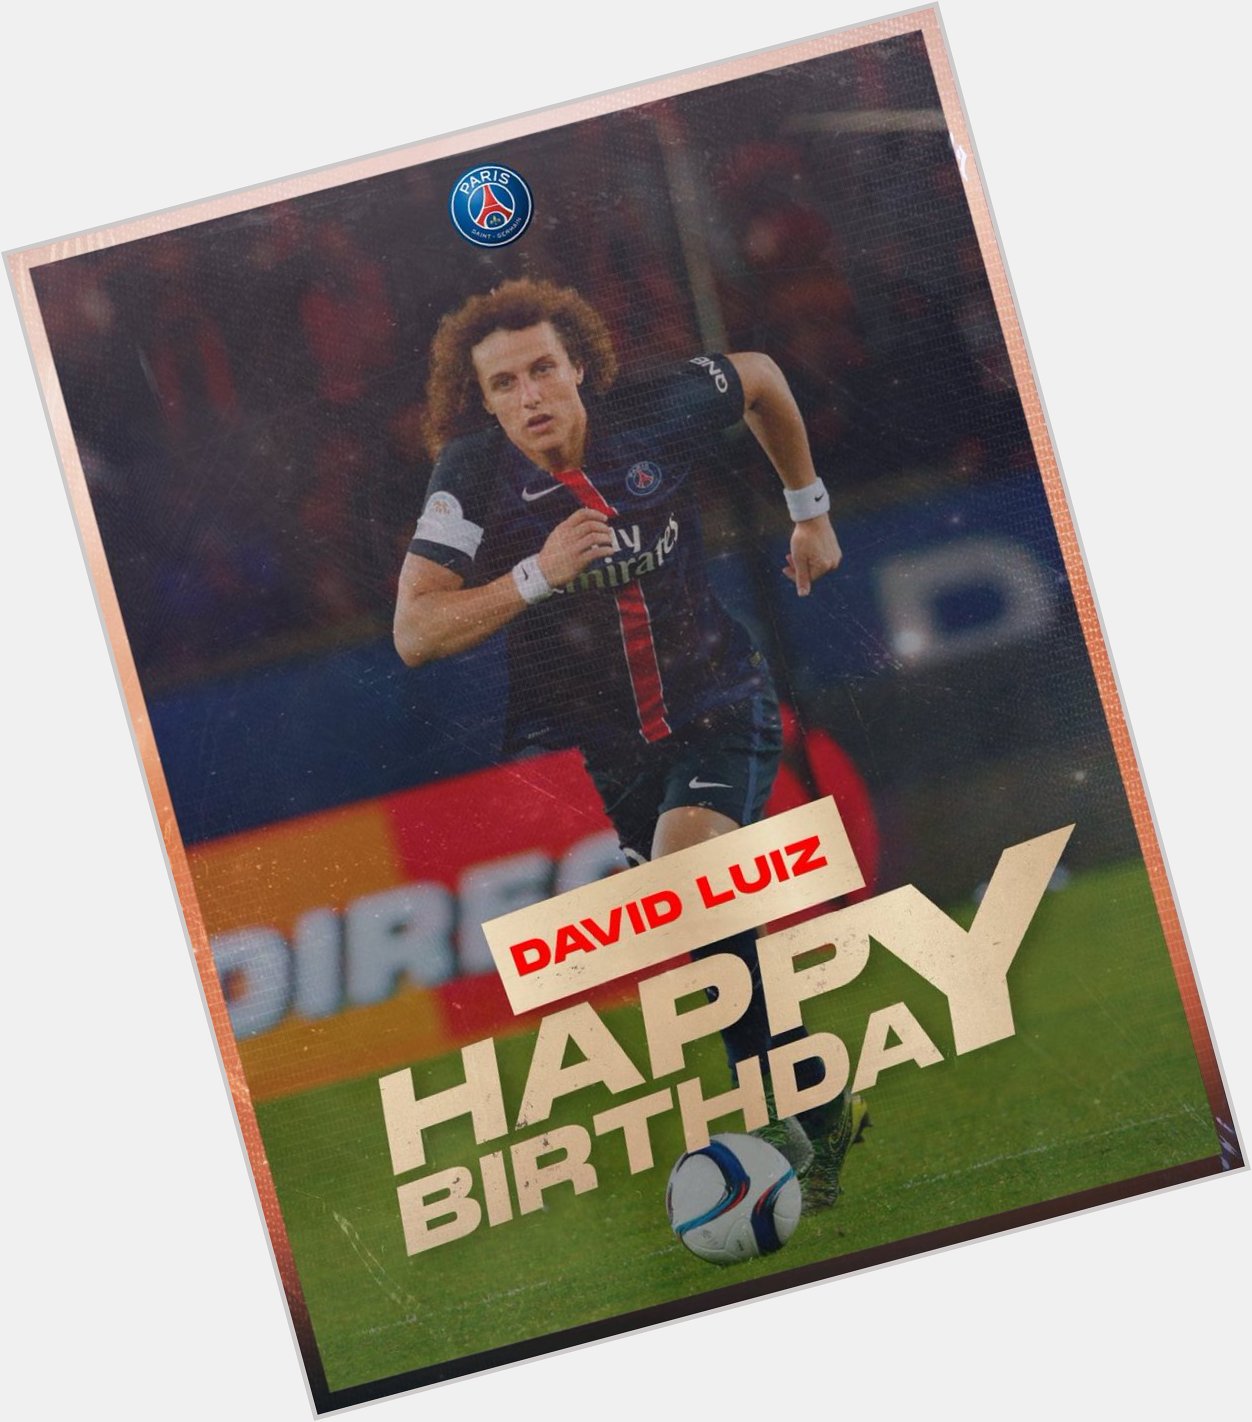  Happy 3  6  th birthday to David Luiz!   